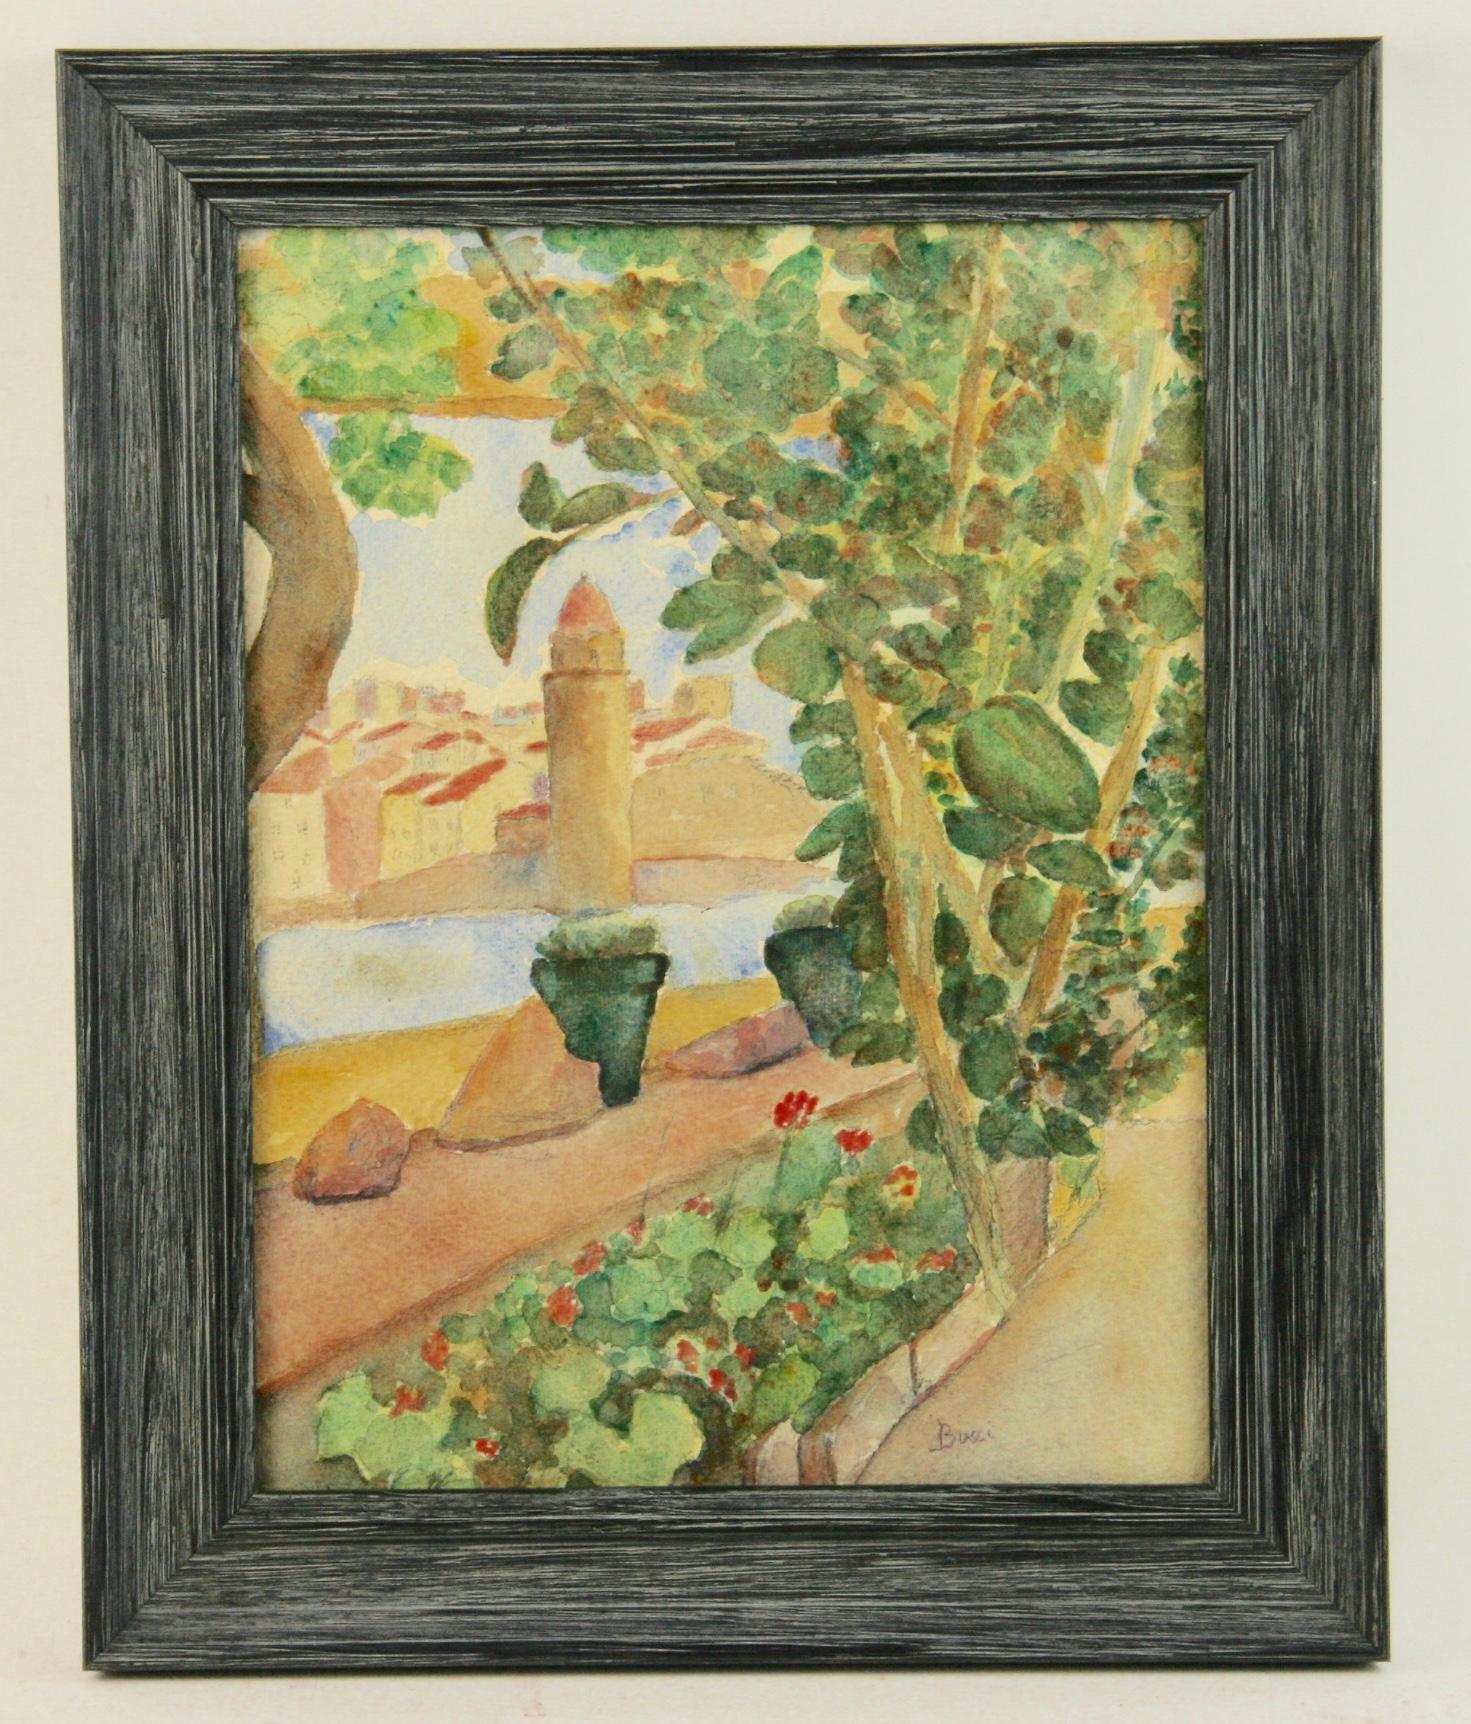 Bucci Landscape Art - Mediterranean Landscape Watercolor